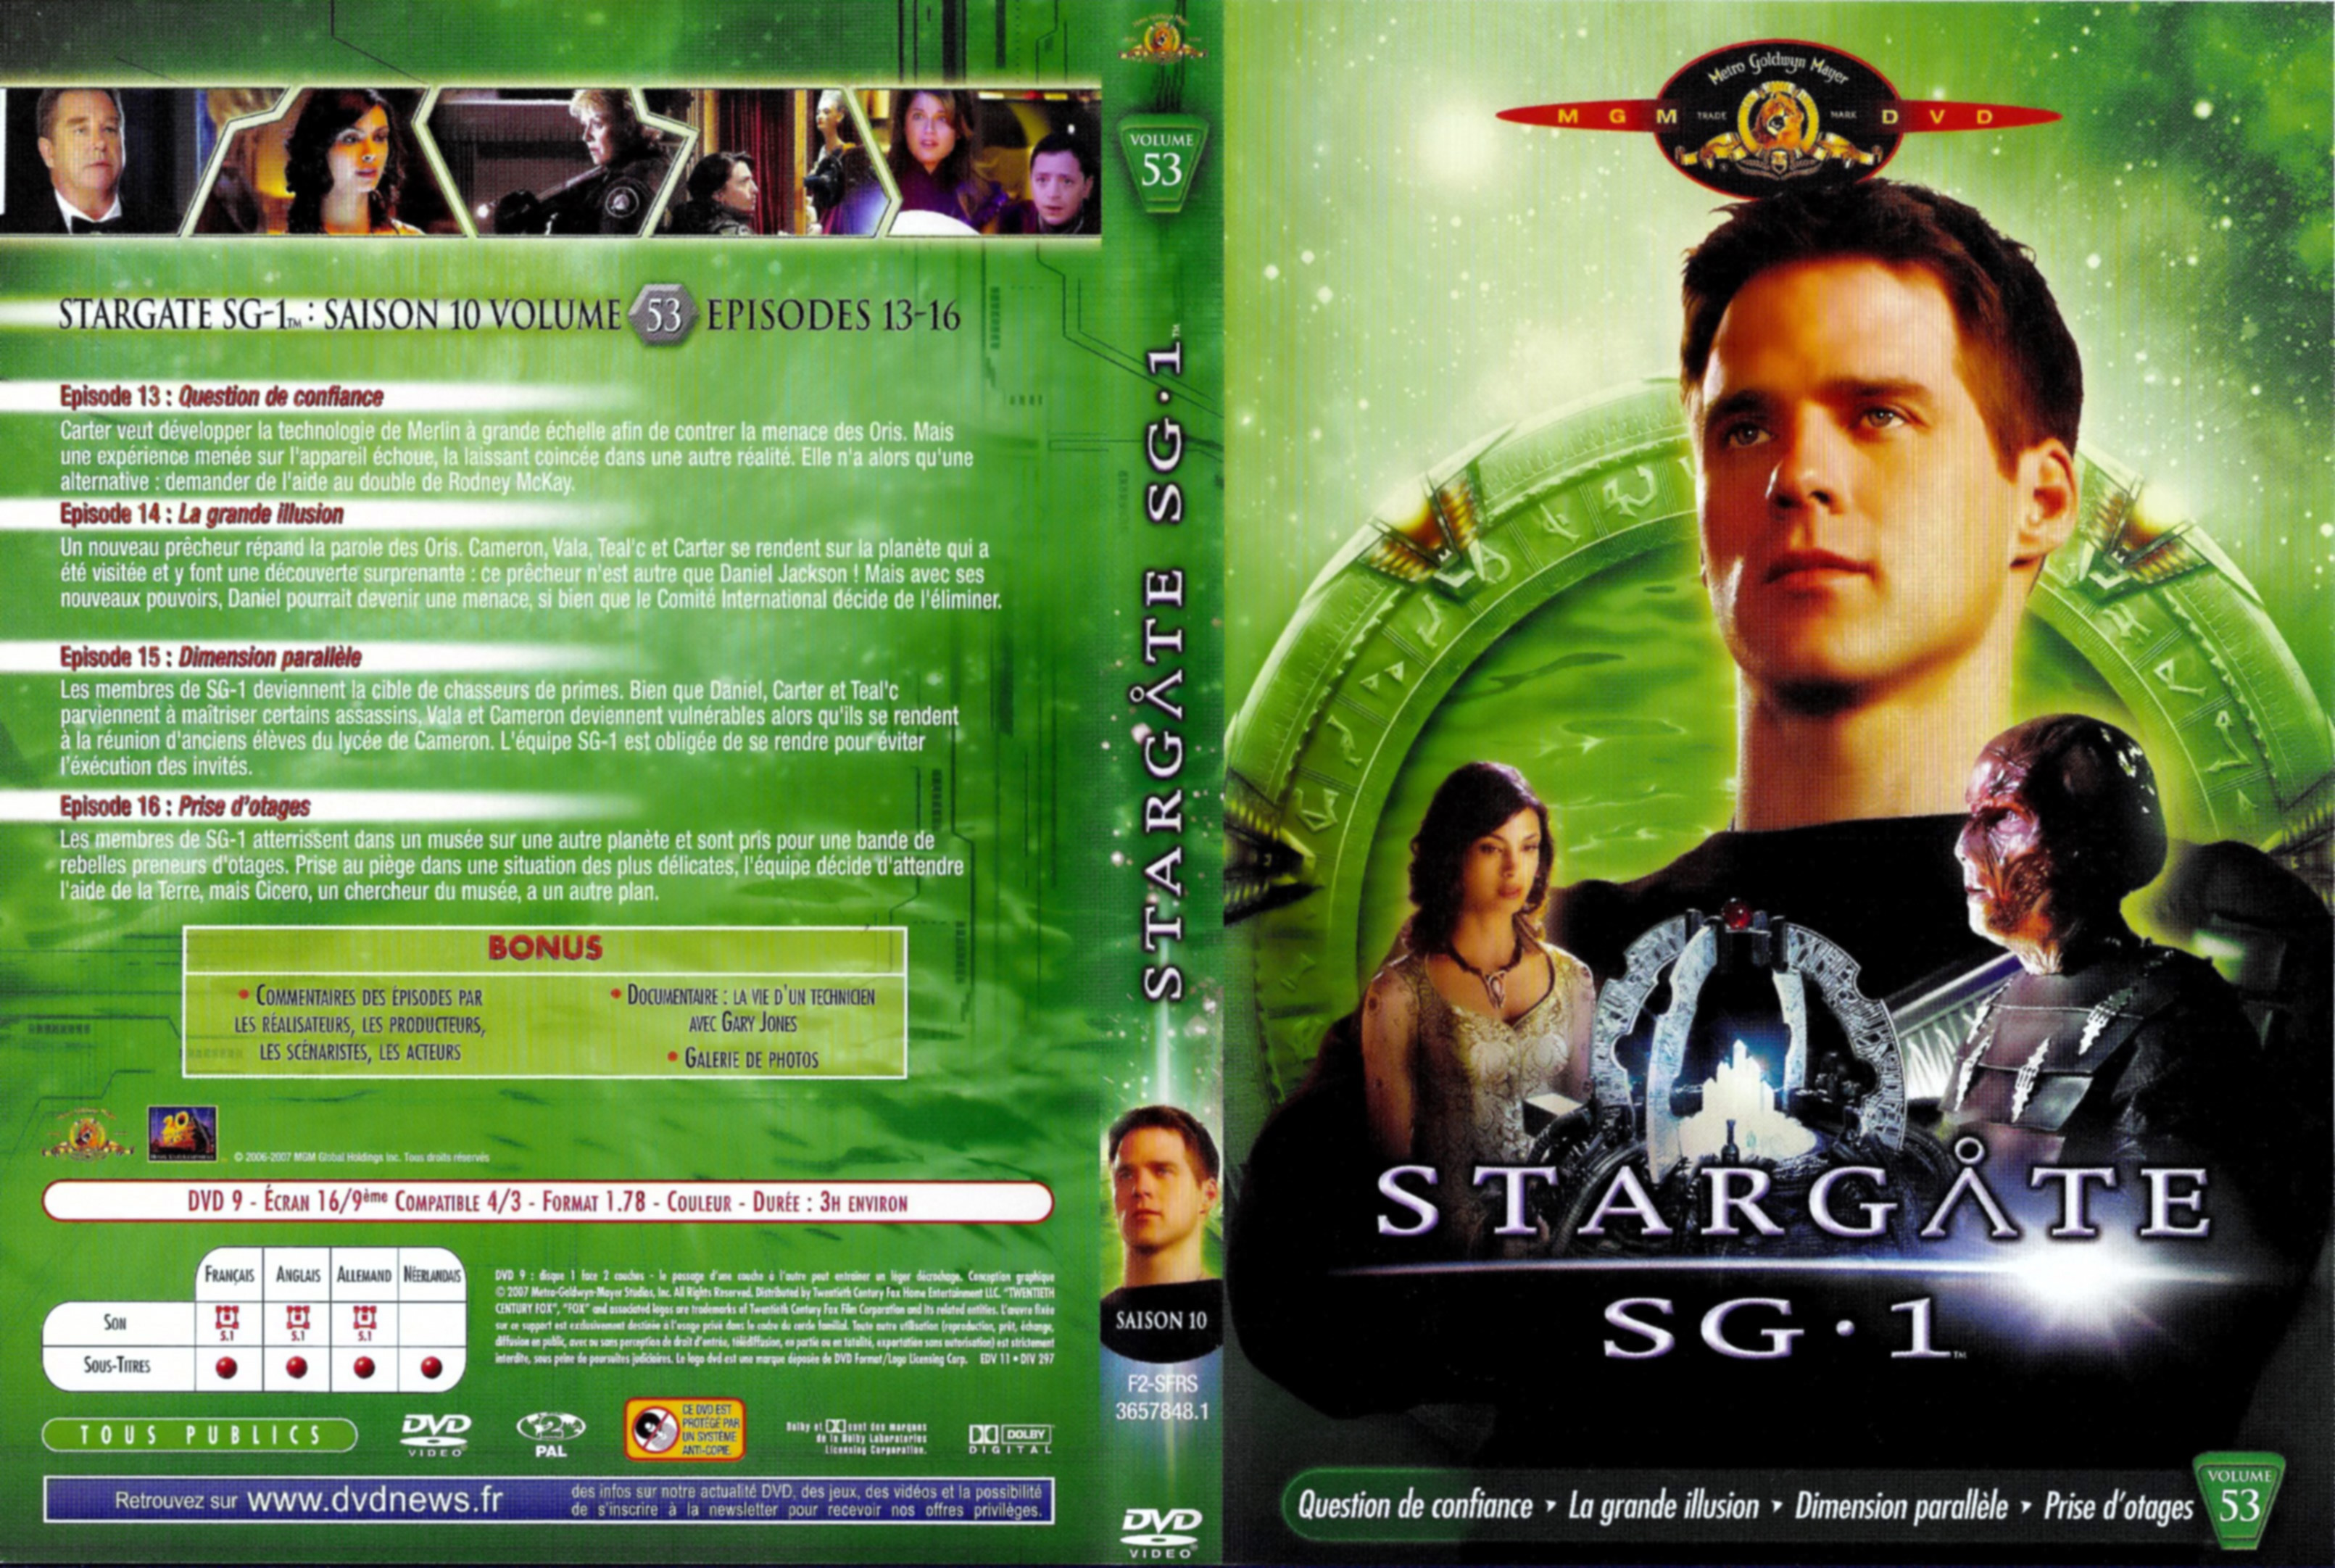 Jaquette DVD Stargate SG1 vol 53